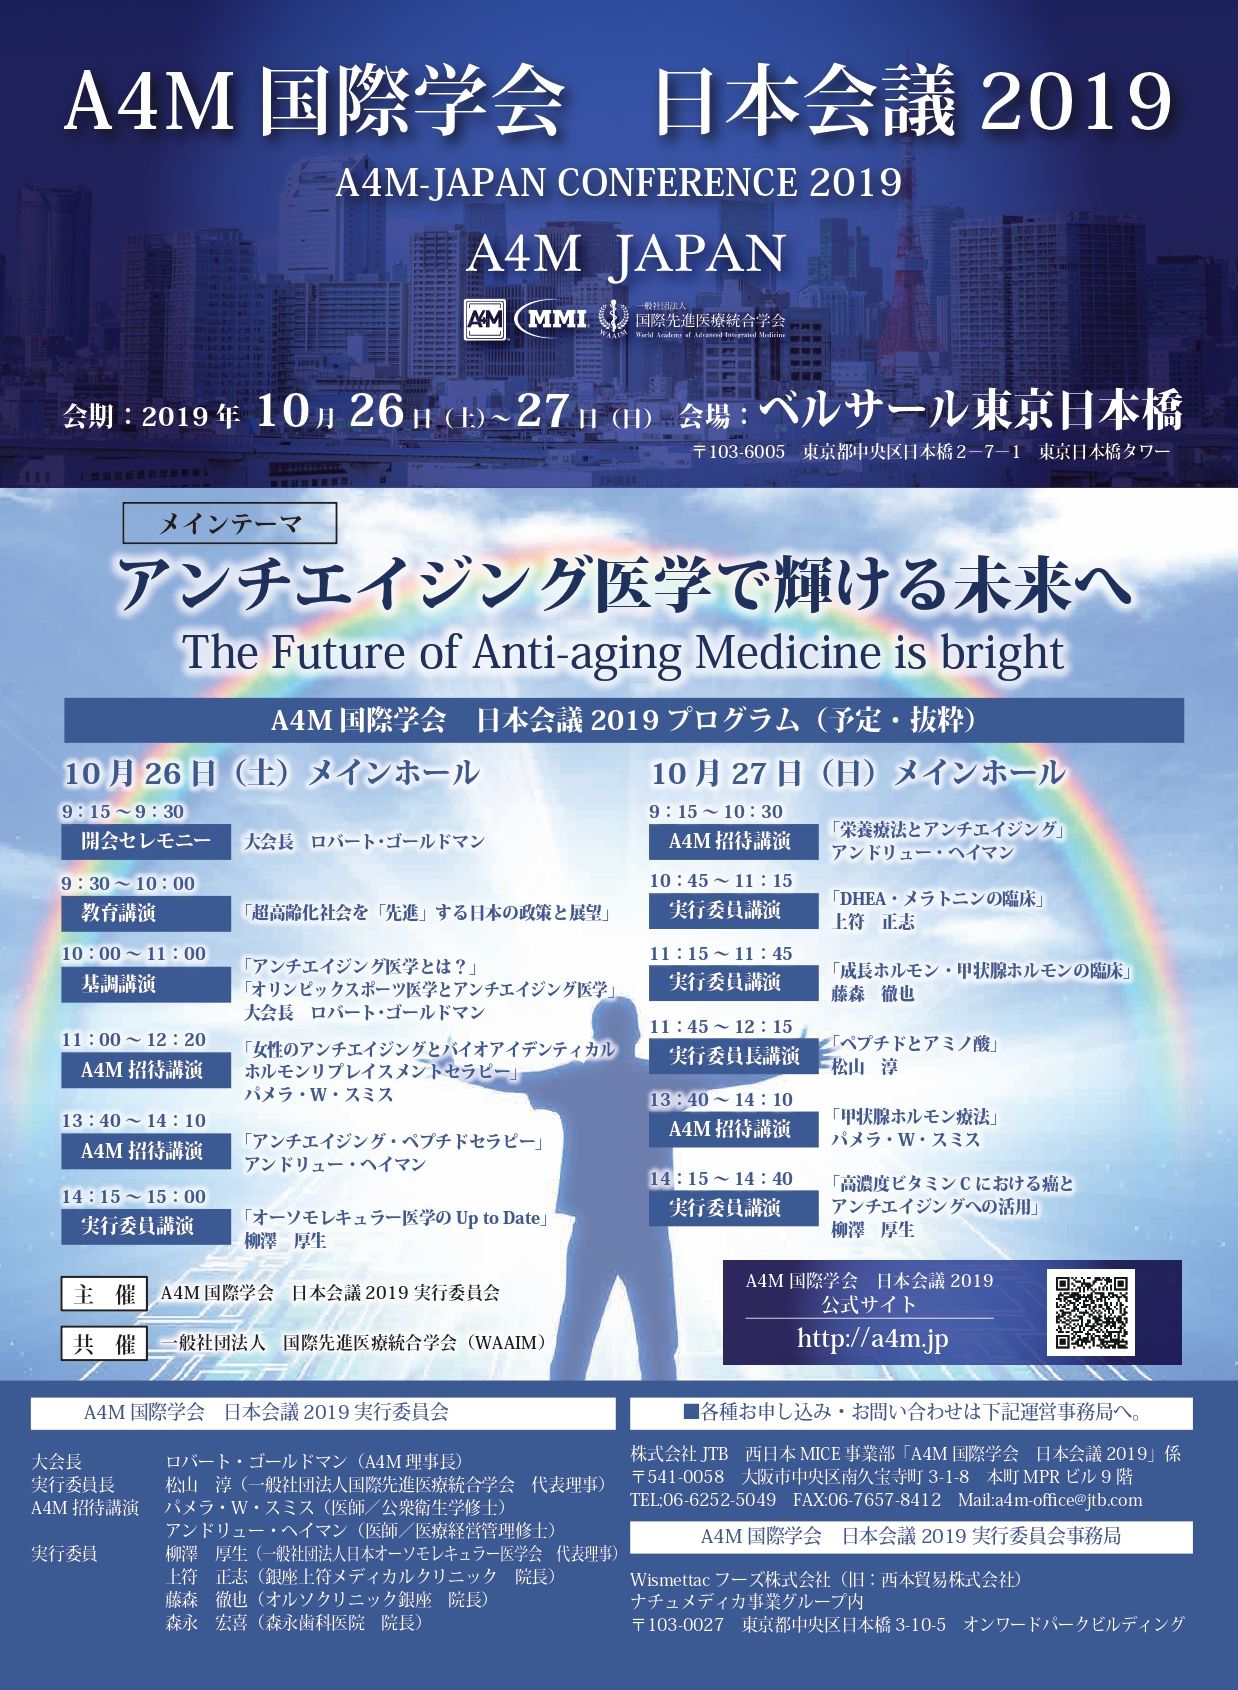 『A4M国際学会　日本会議2019』プログラム最新情報を更新しました。